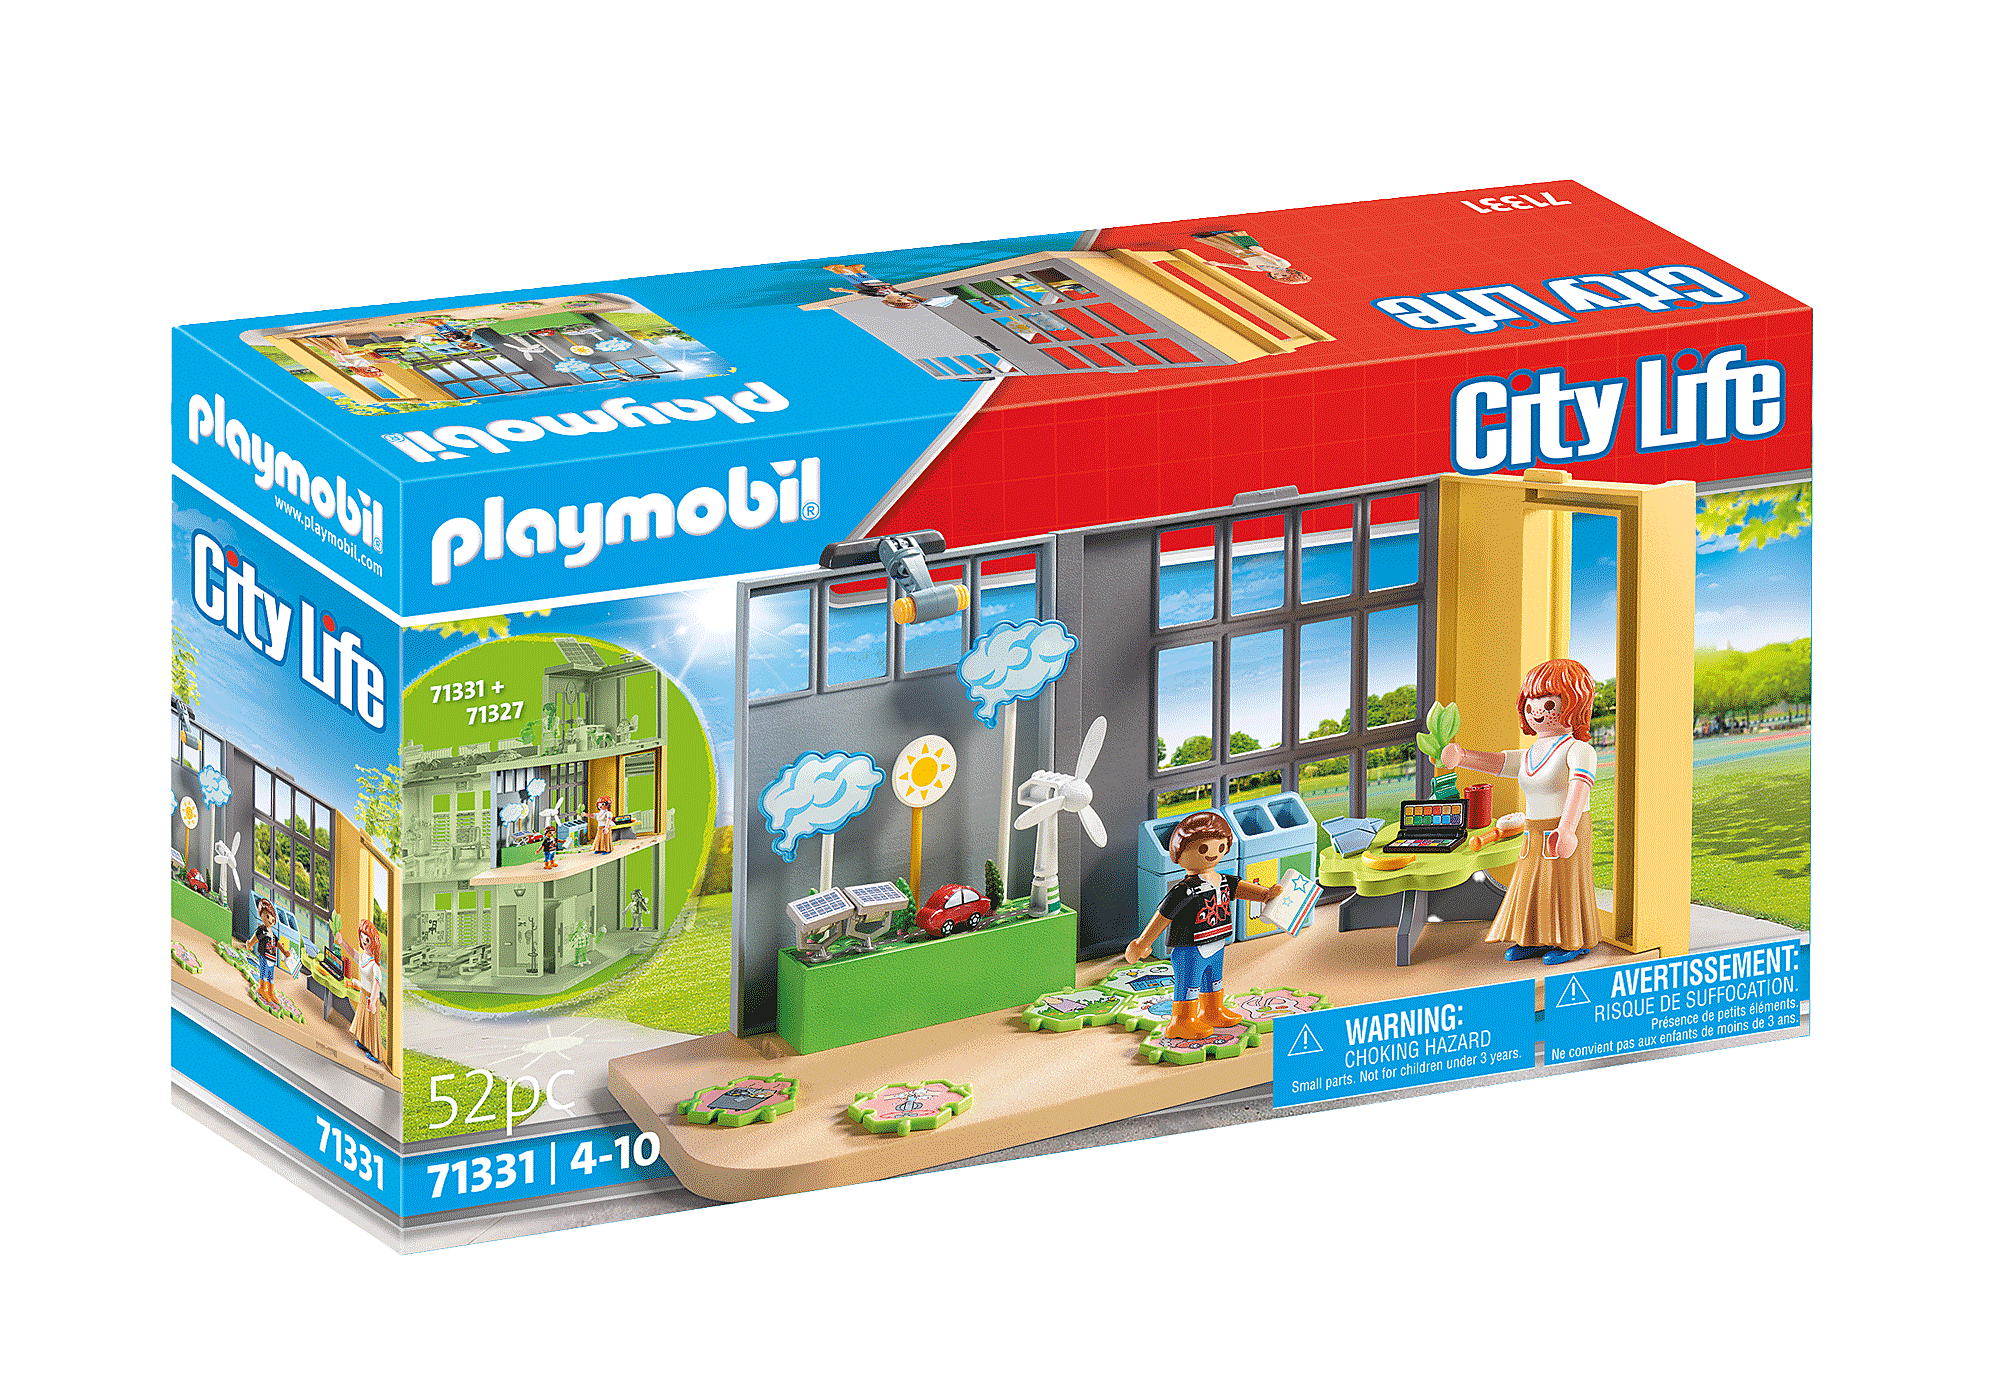  Playmobil Starter Pack Wedding : Toys & Games